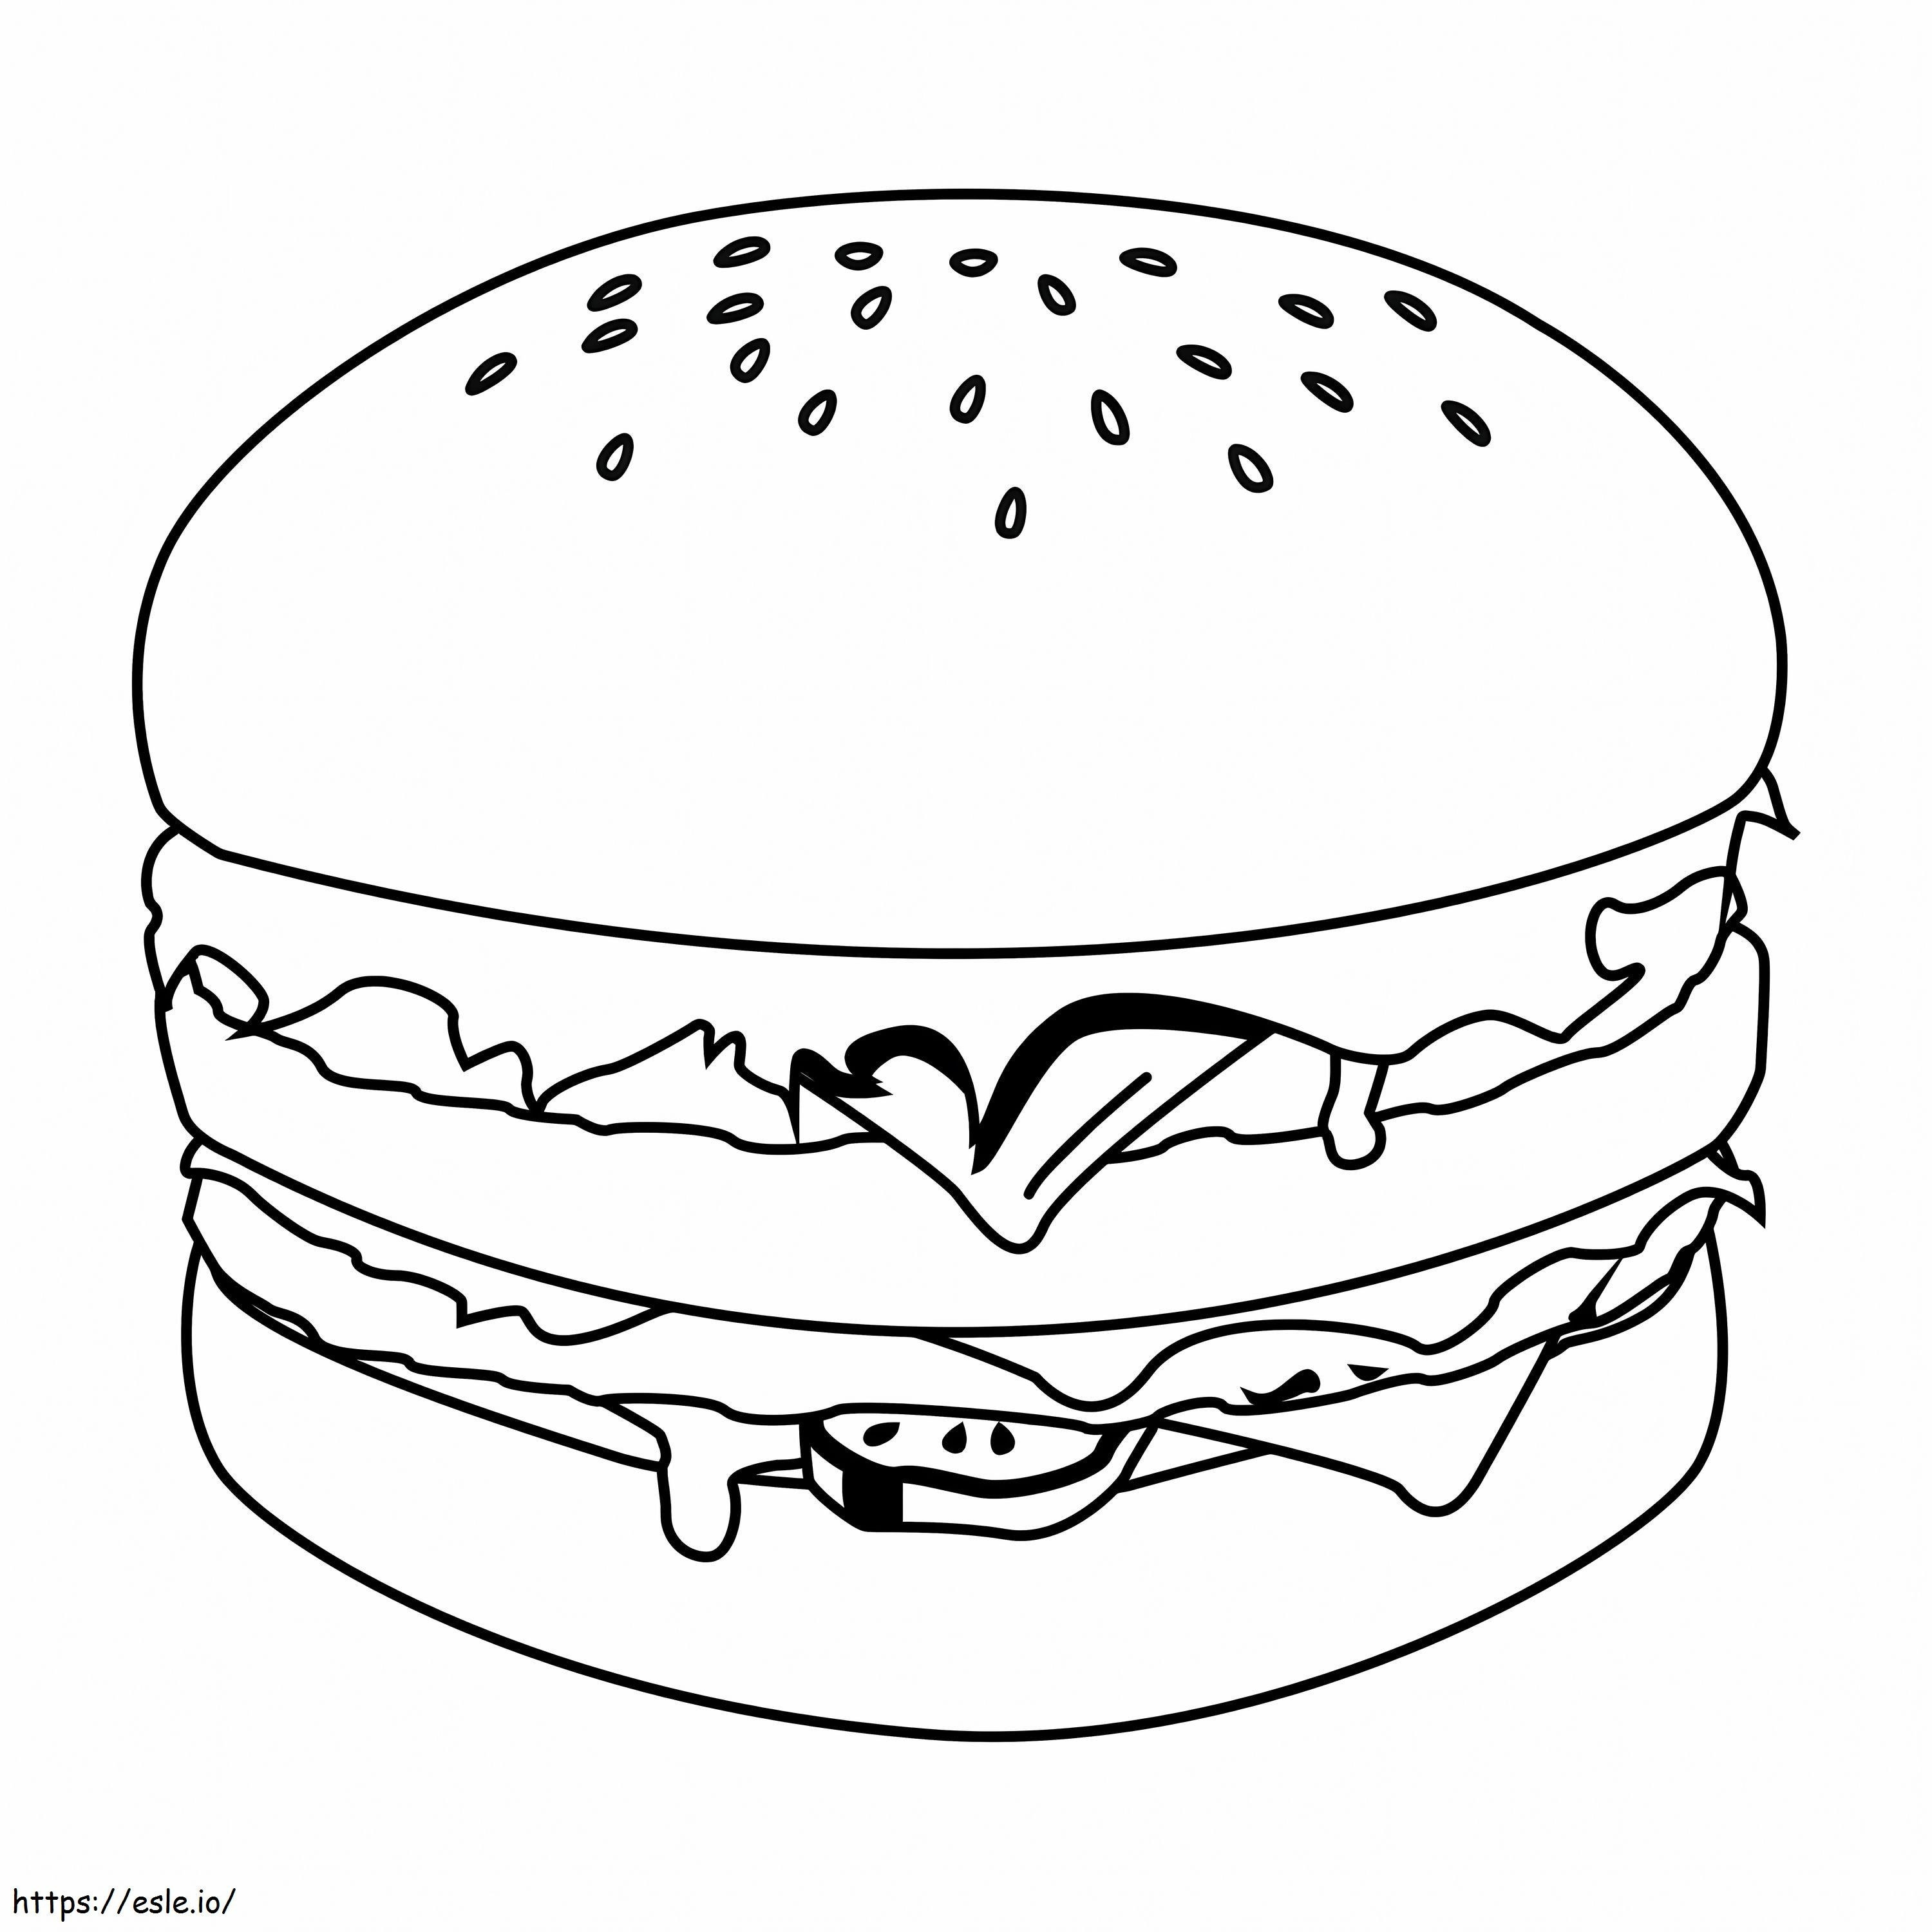 Wonderful Burger coloring page